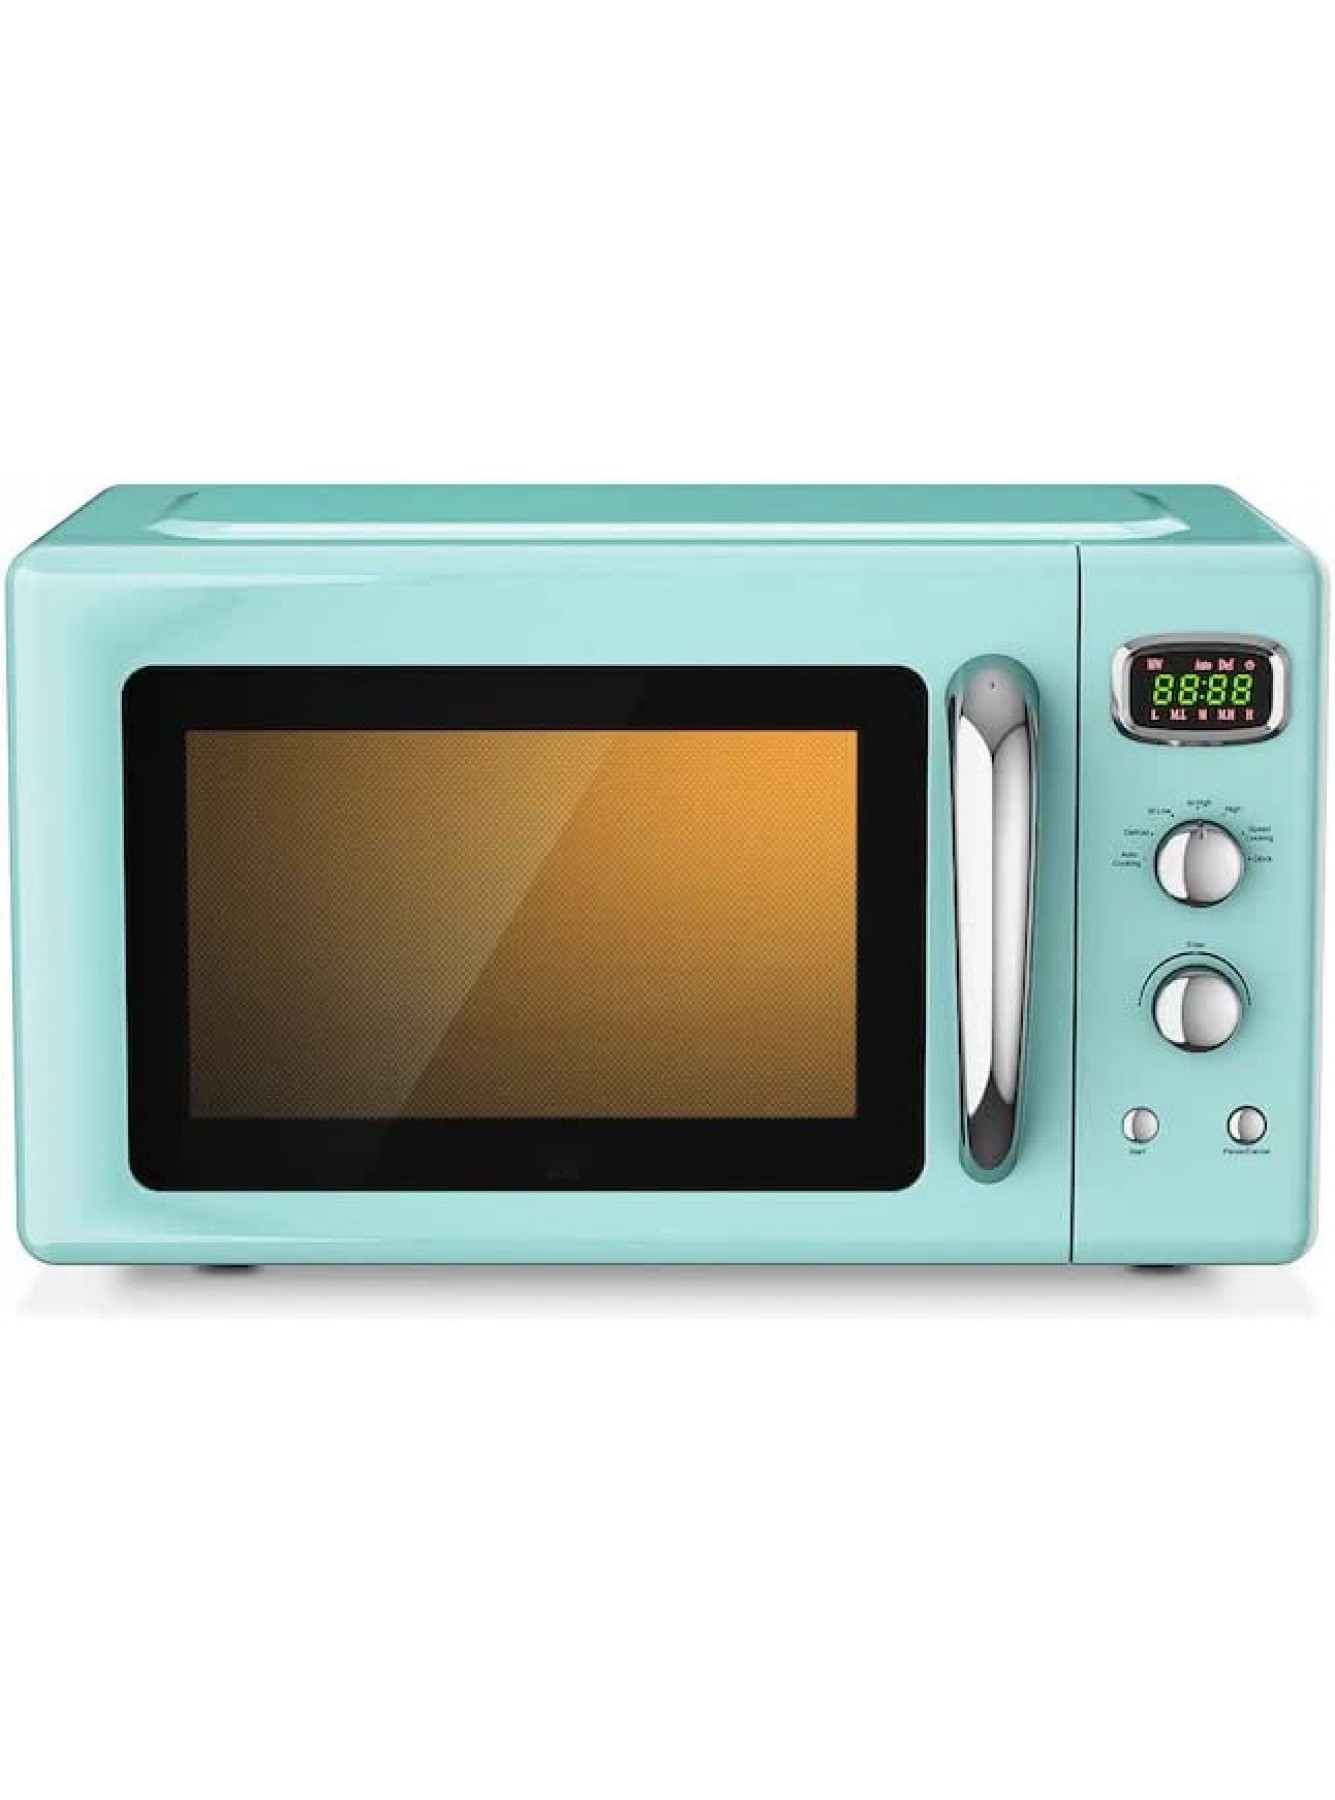 Vycowb 0.9-cu ft 900-Watt Countertop Microwave Green Microwave Oven B0B5HLQFW6